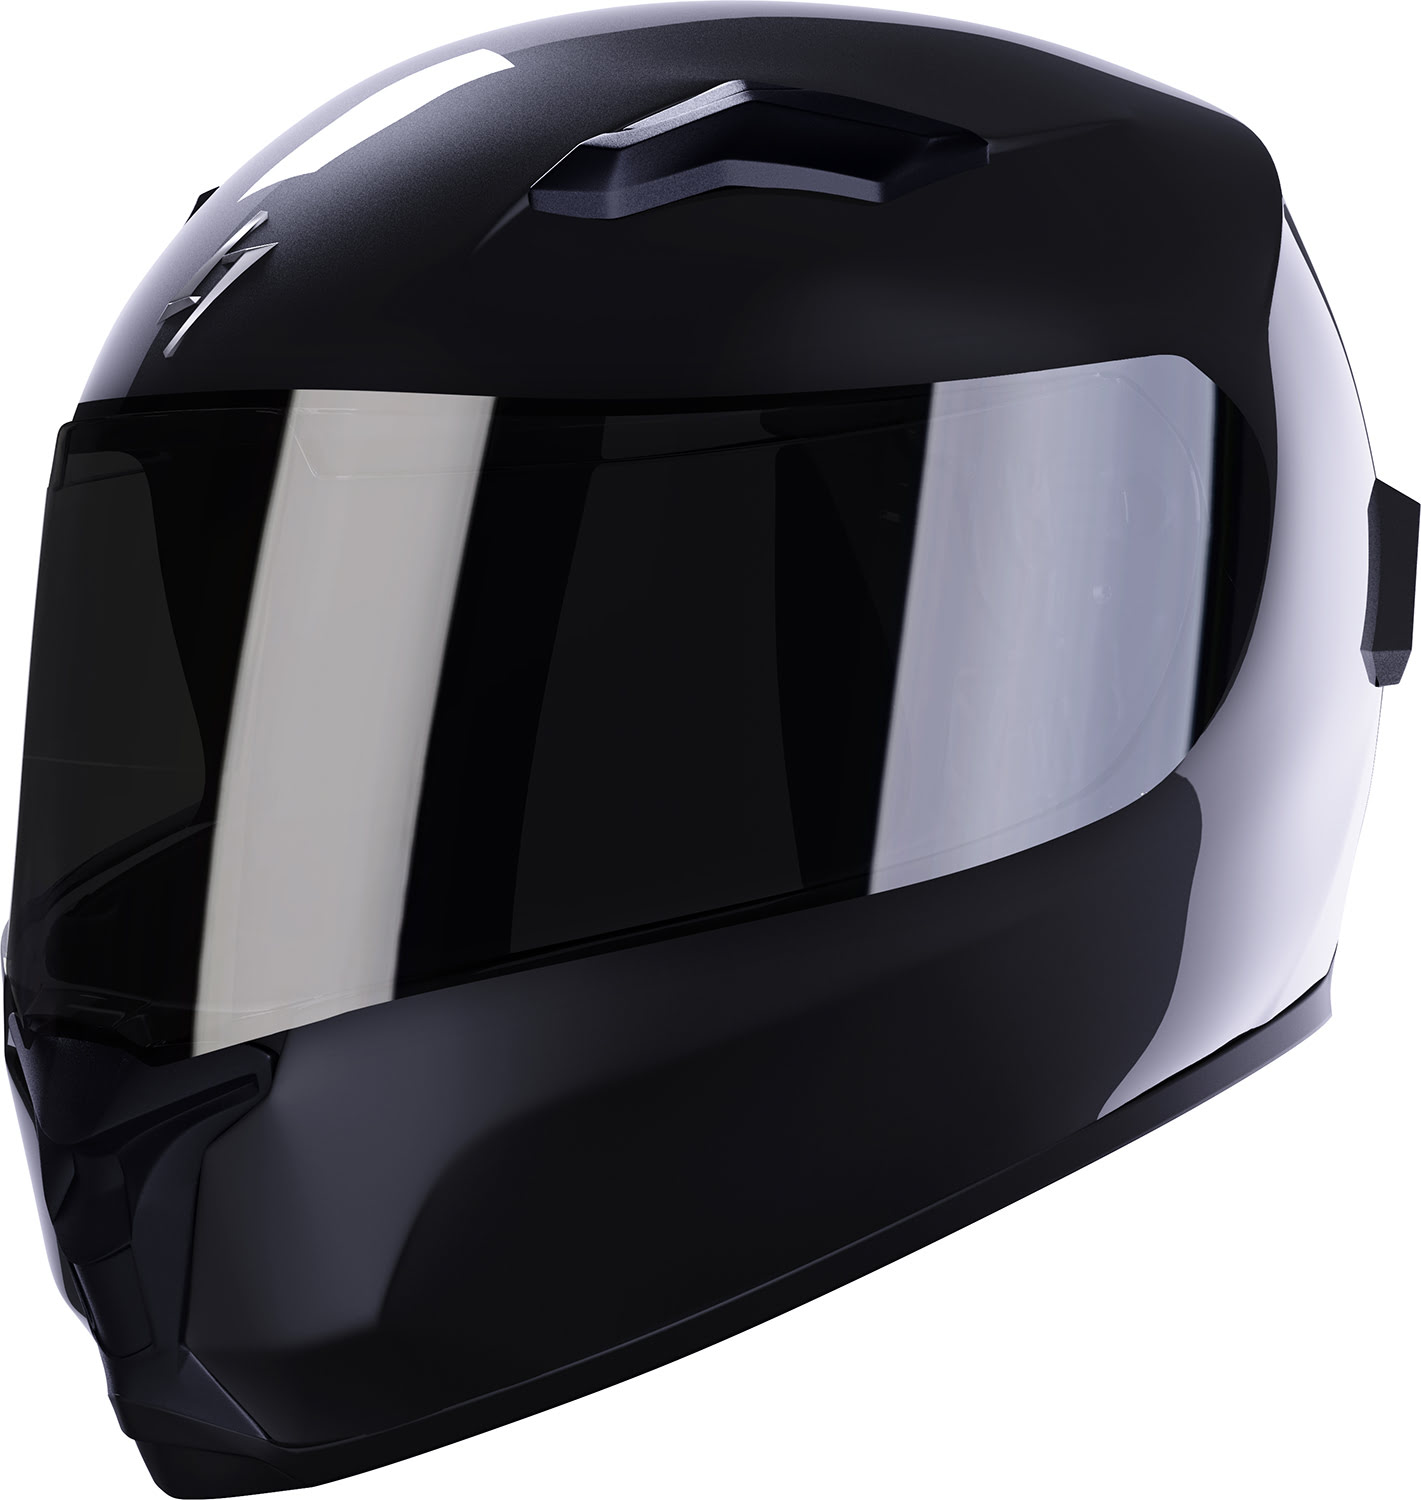 Helmet WISE SOLID Black Pearly STORMER 